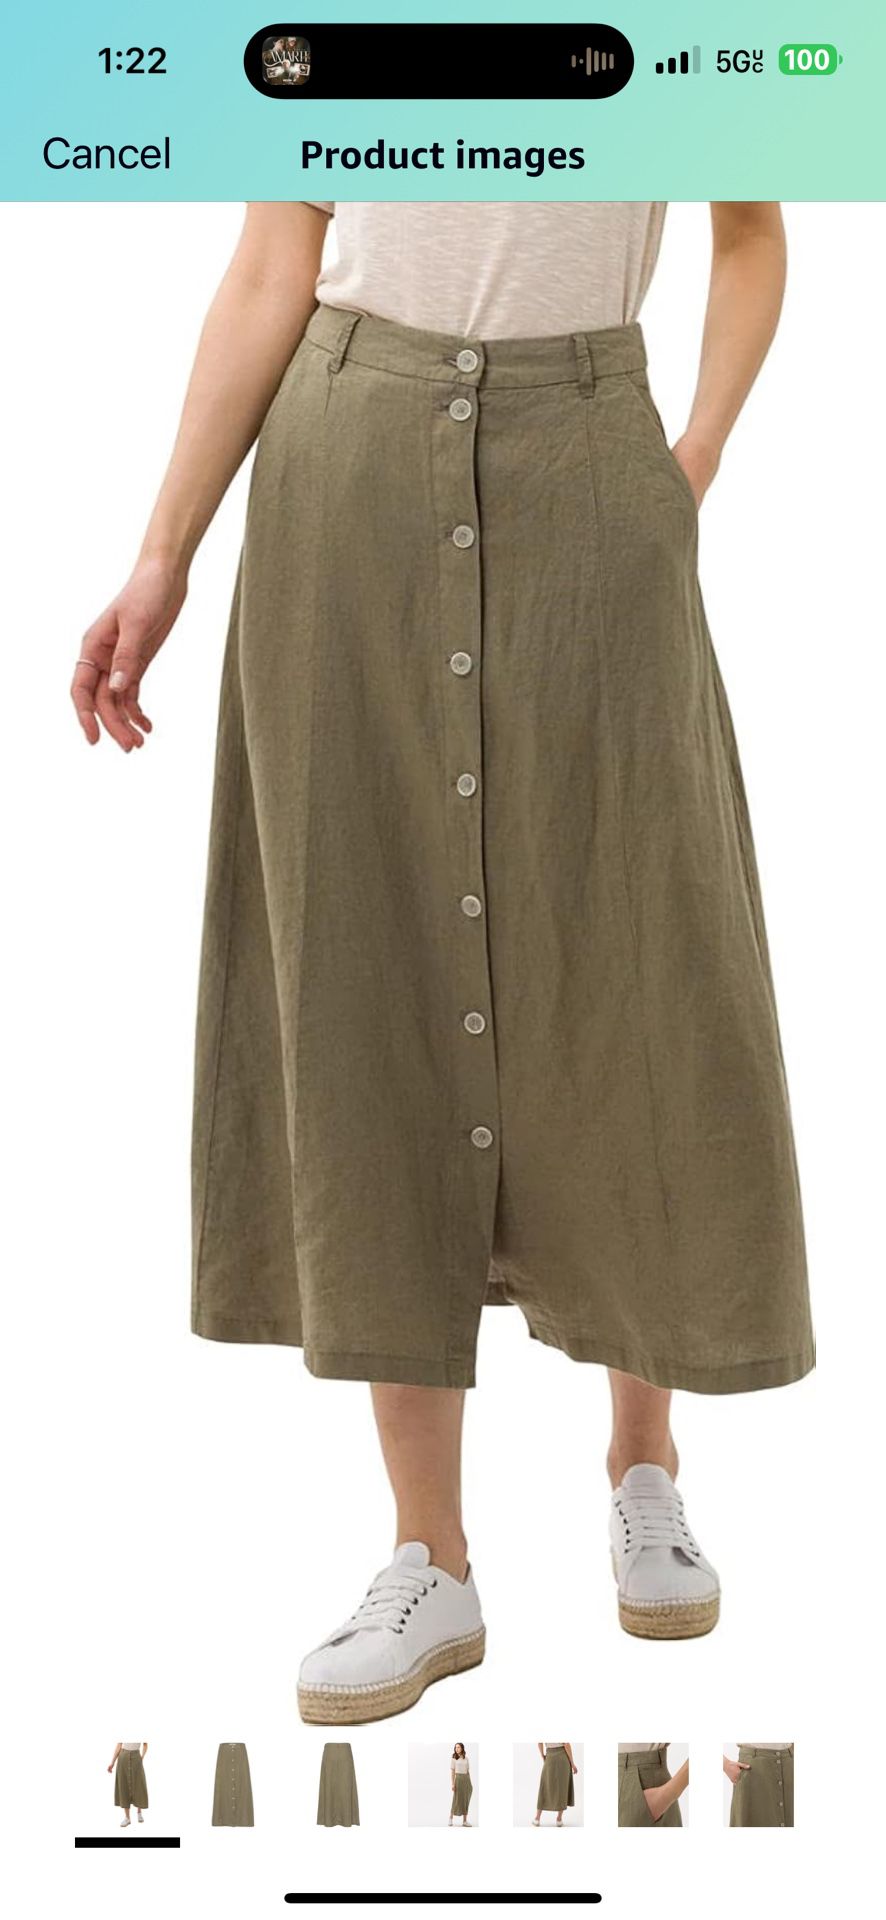 Designer Army Green Midi Skirt Sz.XL